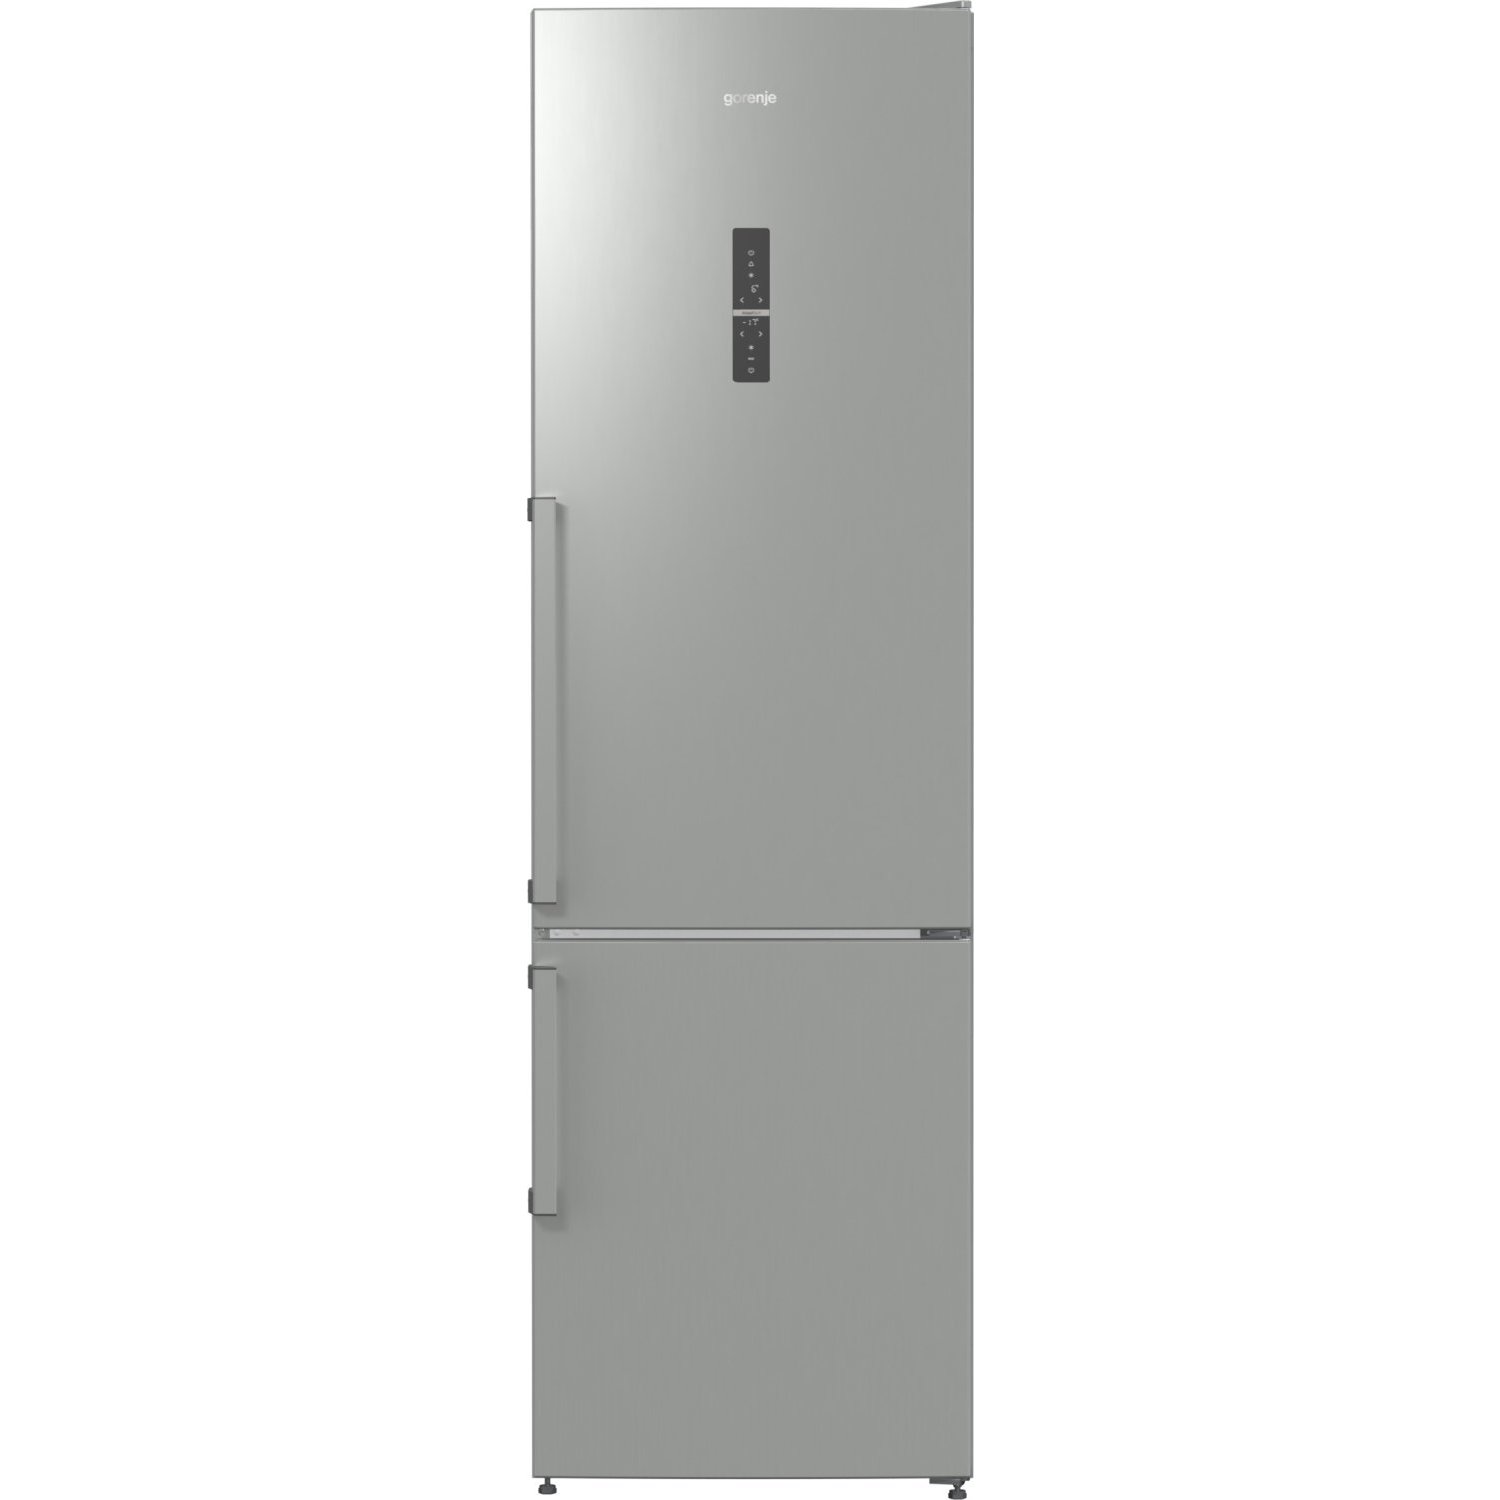 Узкий холодильник 50 купить. Холодильник Beko RCSK 379m21s. Холодильник Beko CSKR 5310m21 s. Холодильник Beko CSKR 5335m21 s. Холодильник Beko rcsk310m20sb.